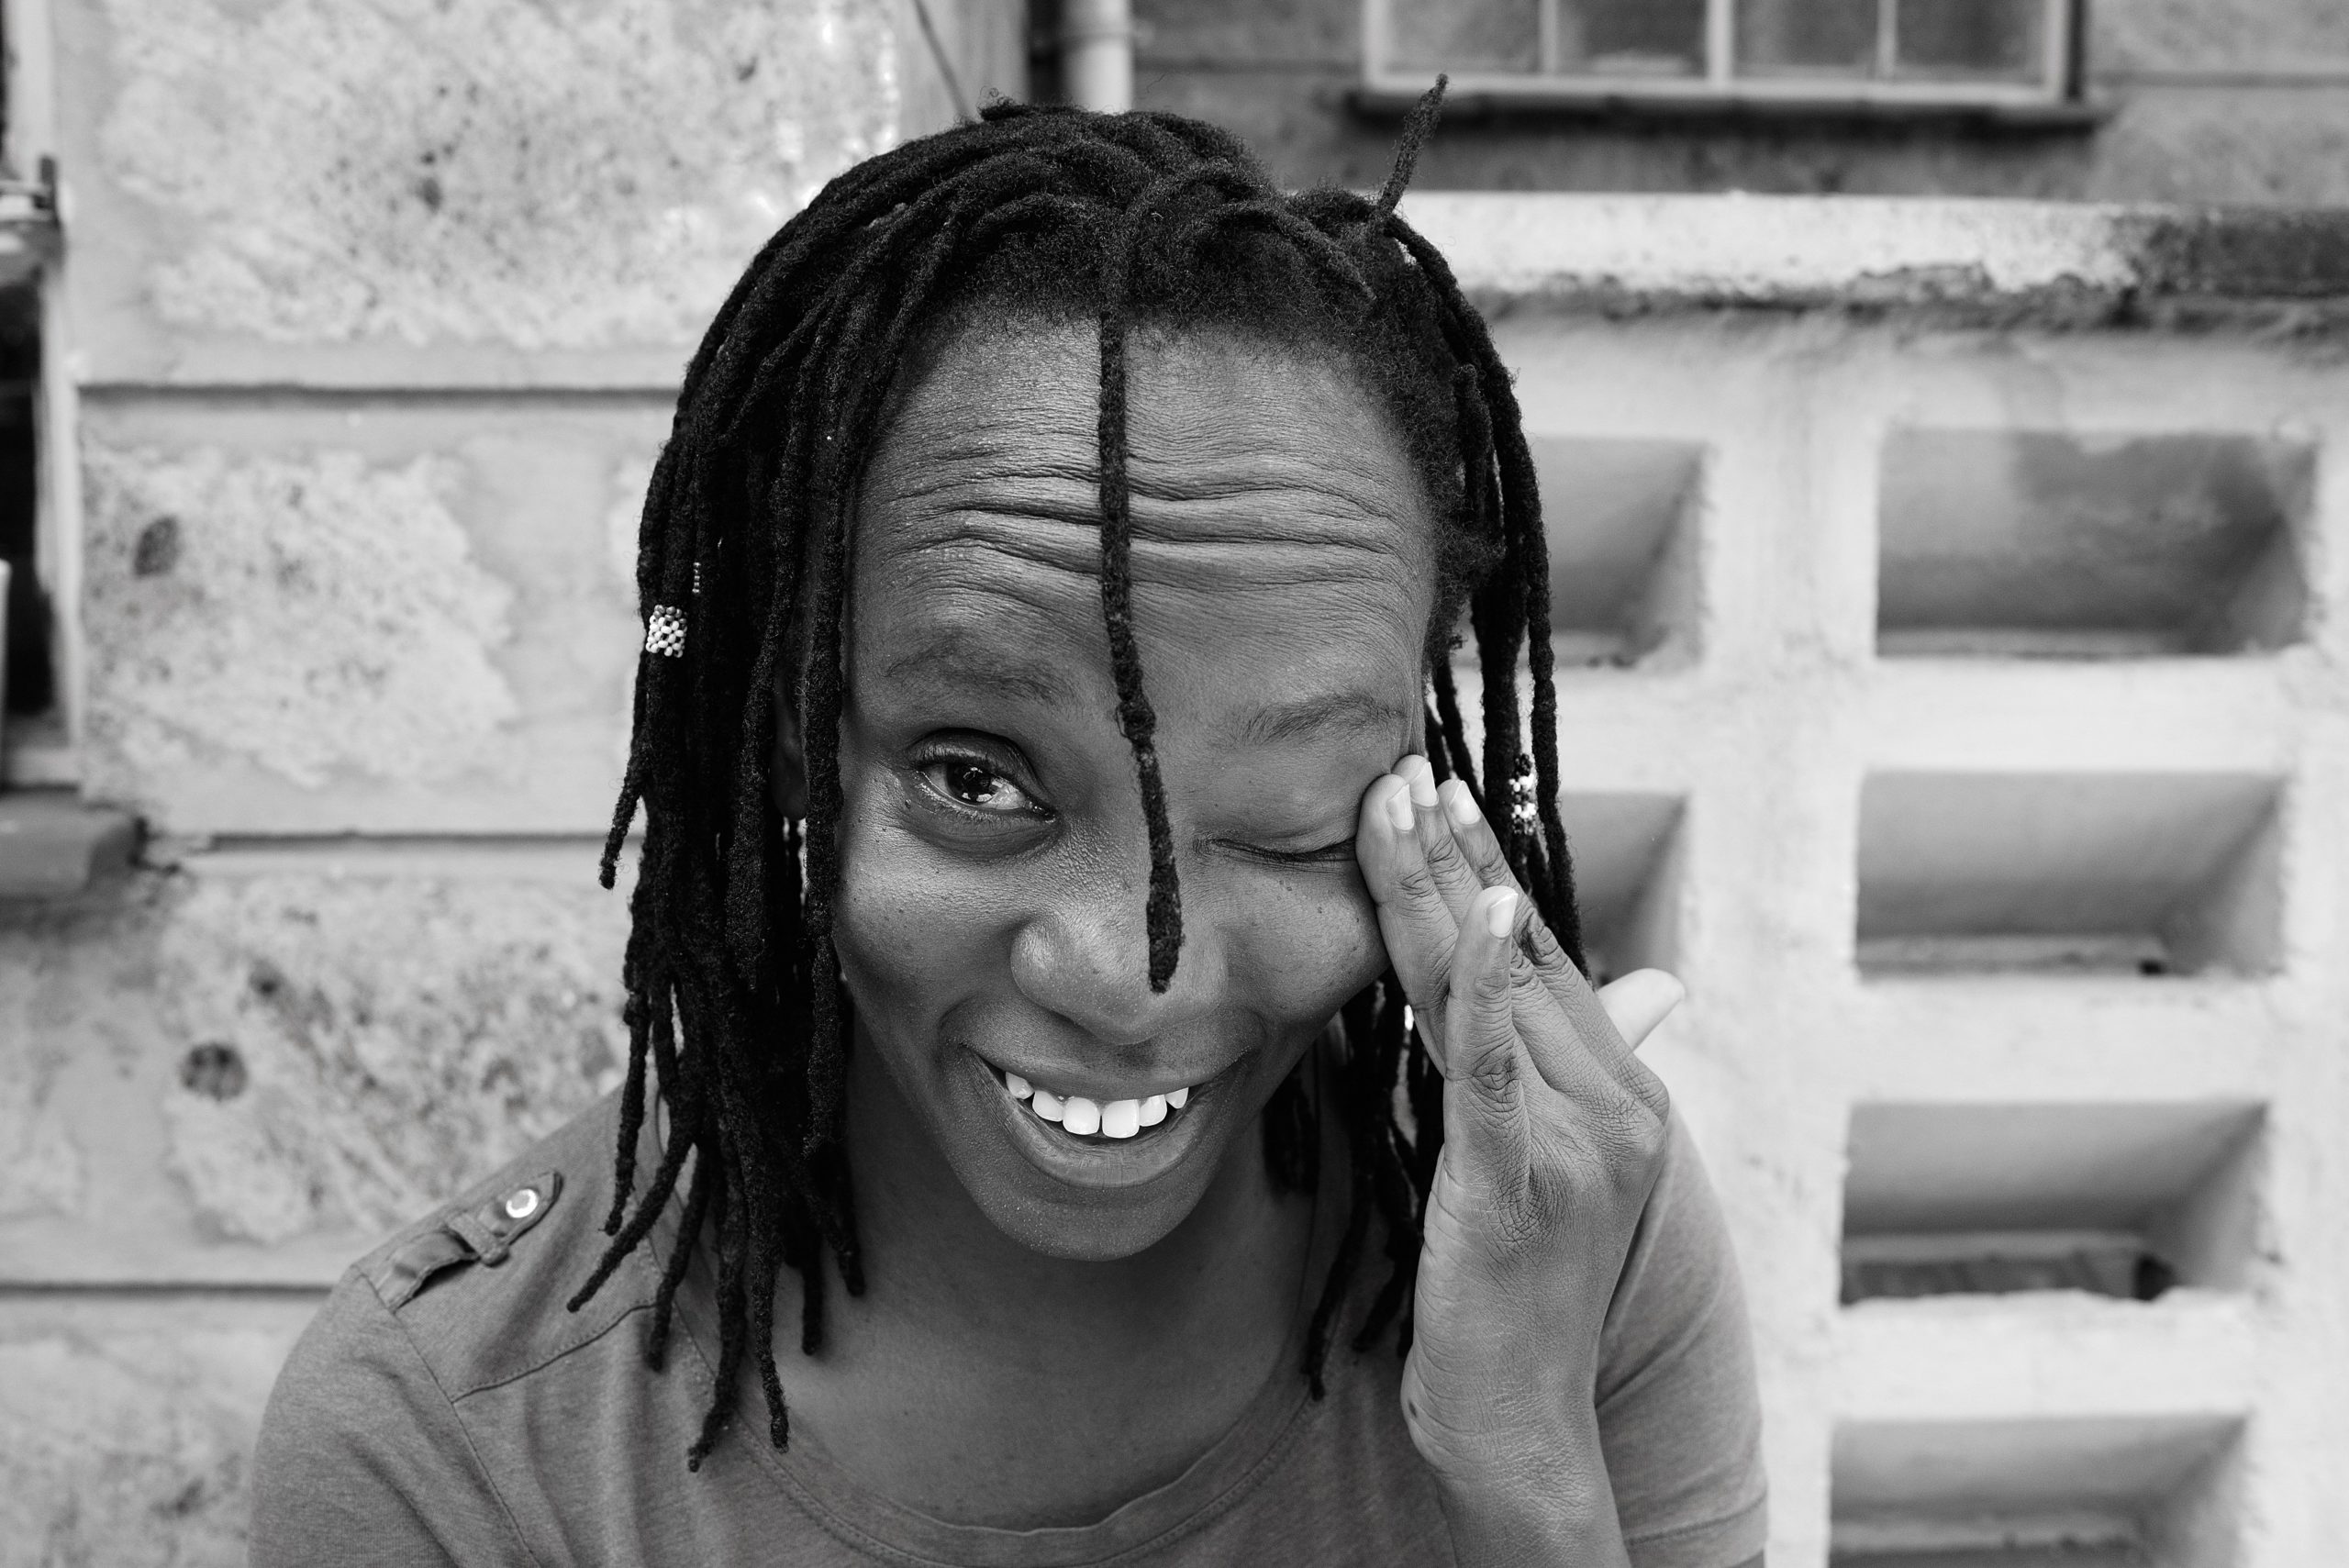 australian portrait photographer,gathoni howard photographer,nairobi portrait photographer,www.gathoni.com,